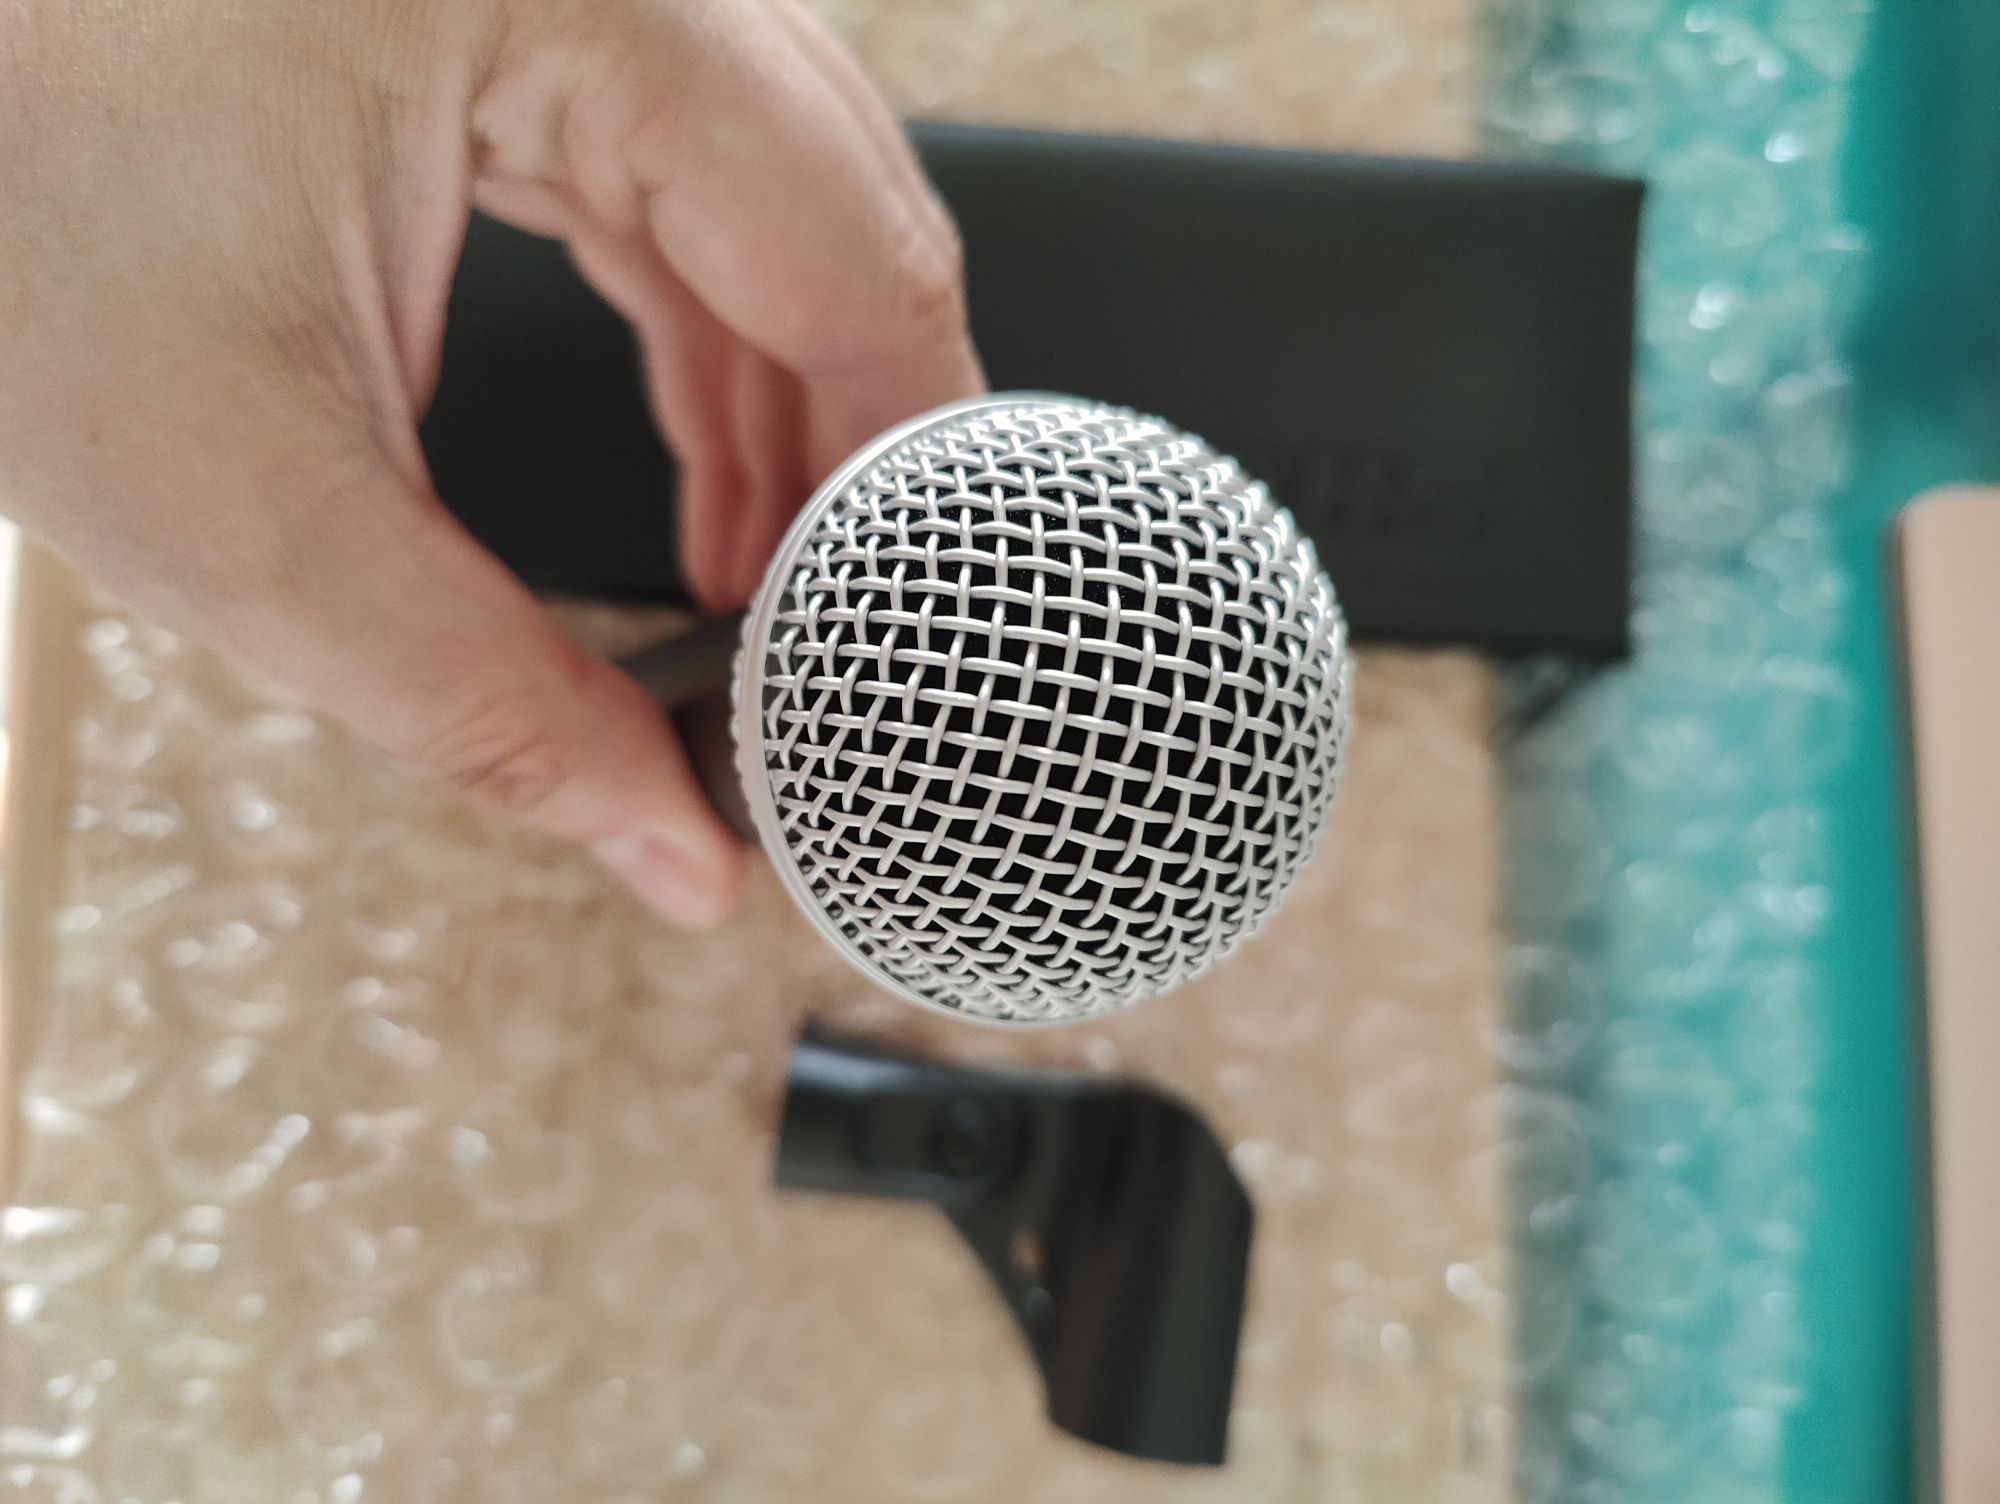 Новий мікрофон Shure sm58 SE